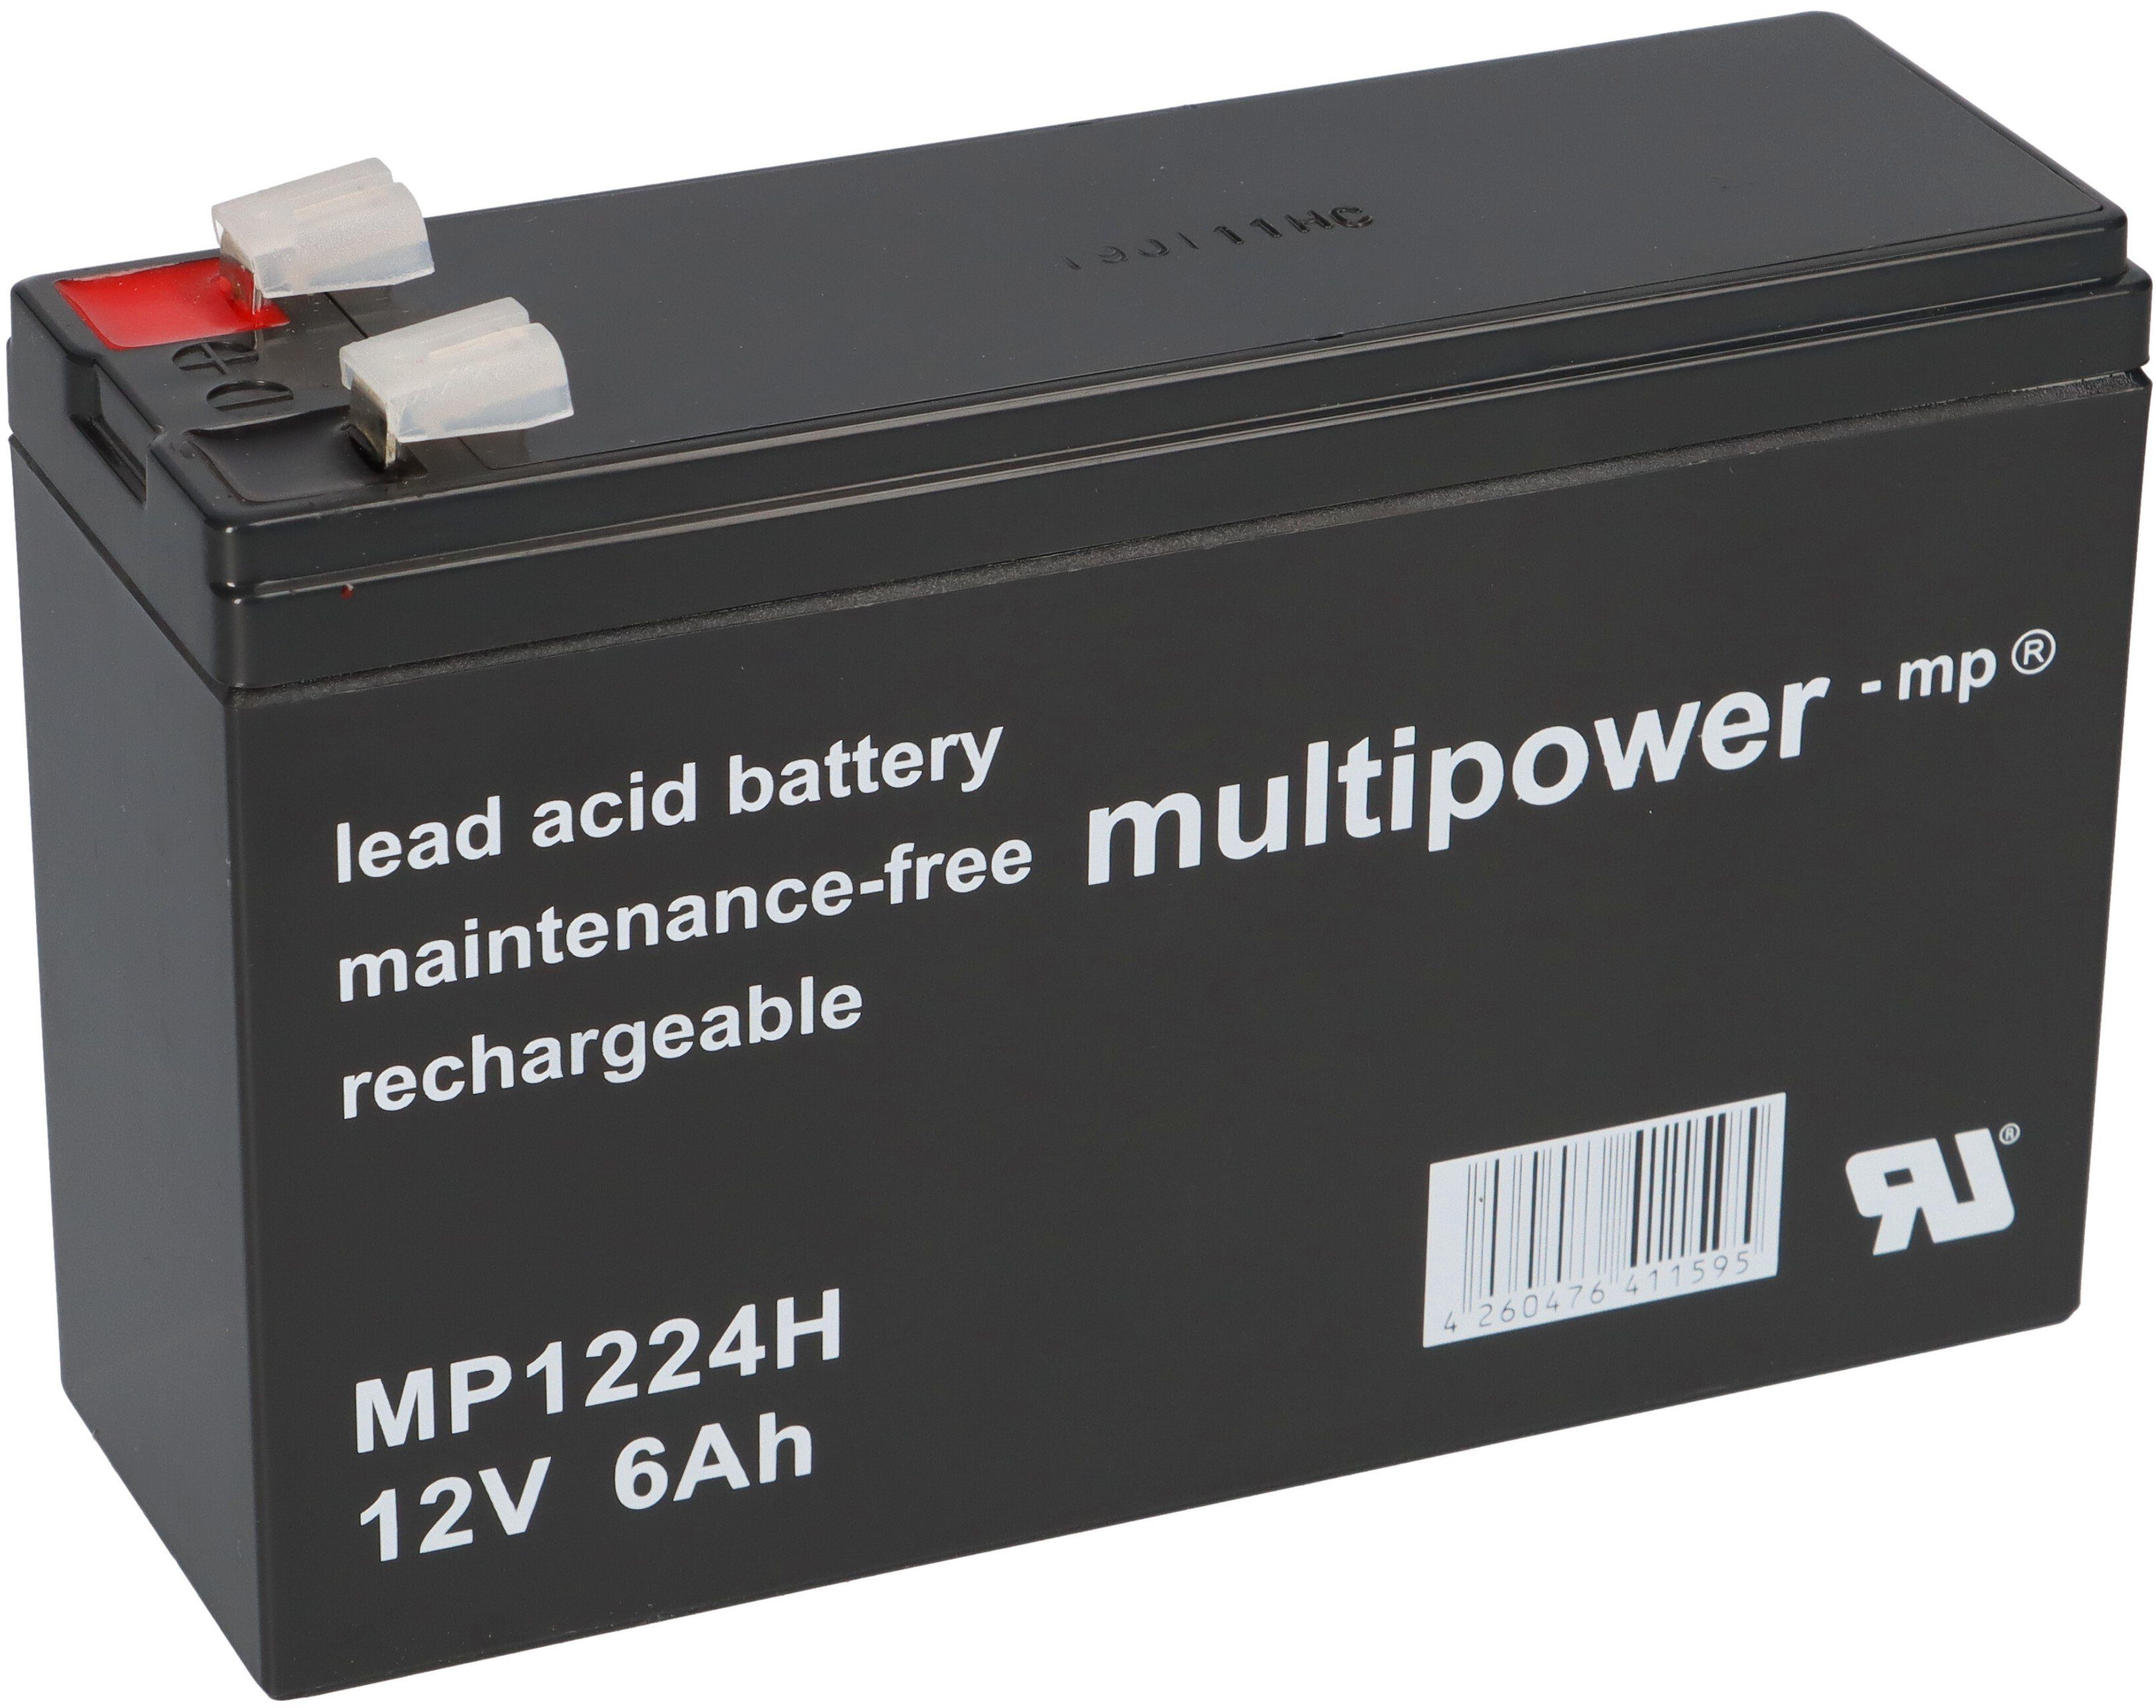 Sunstone Power 12V 100AH 10hr Lead Acid Gel Batterie Speicher für  Notbeleuchtung Bleiakkus